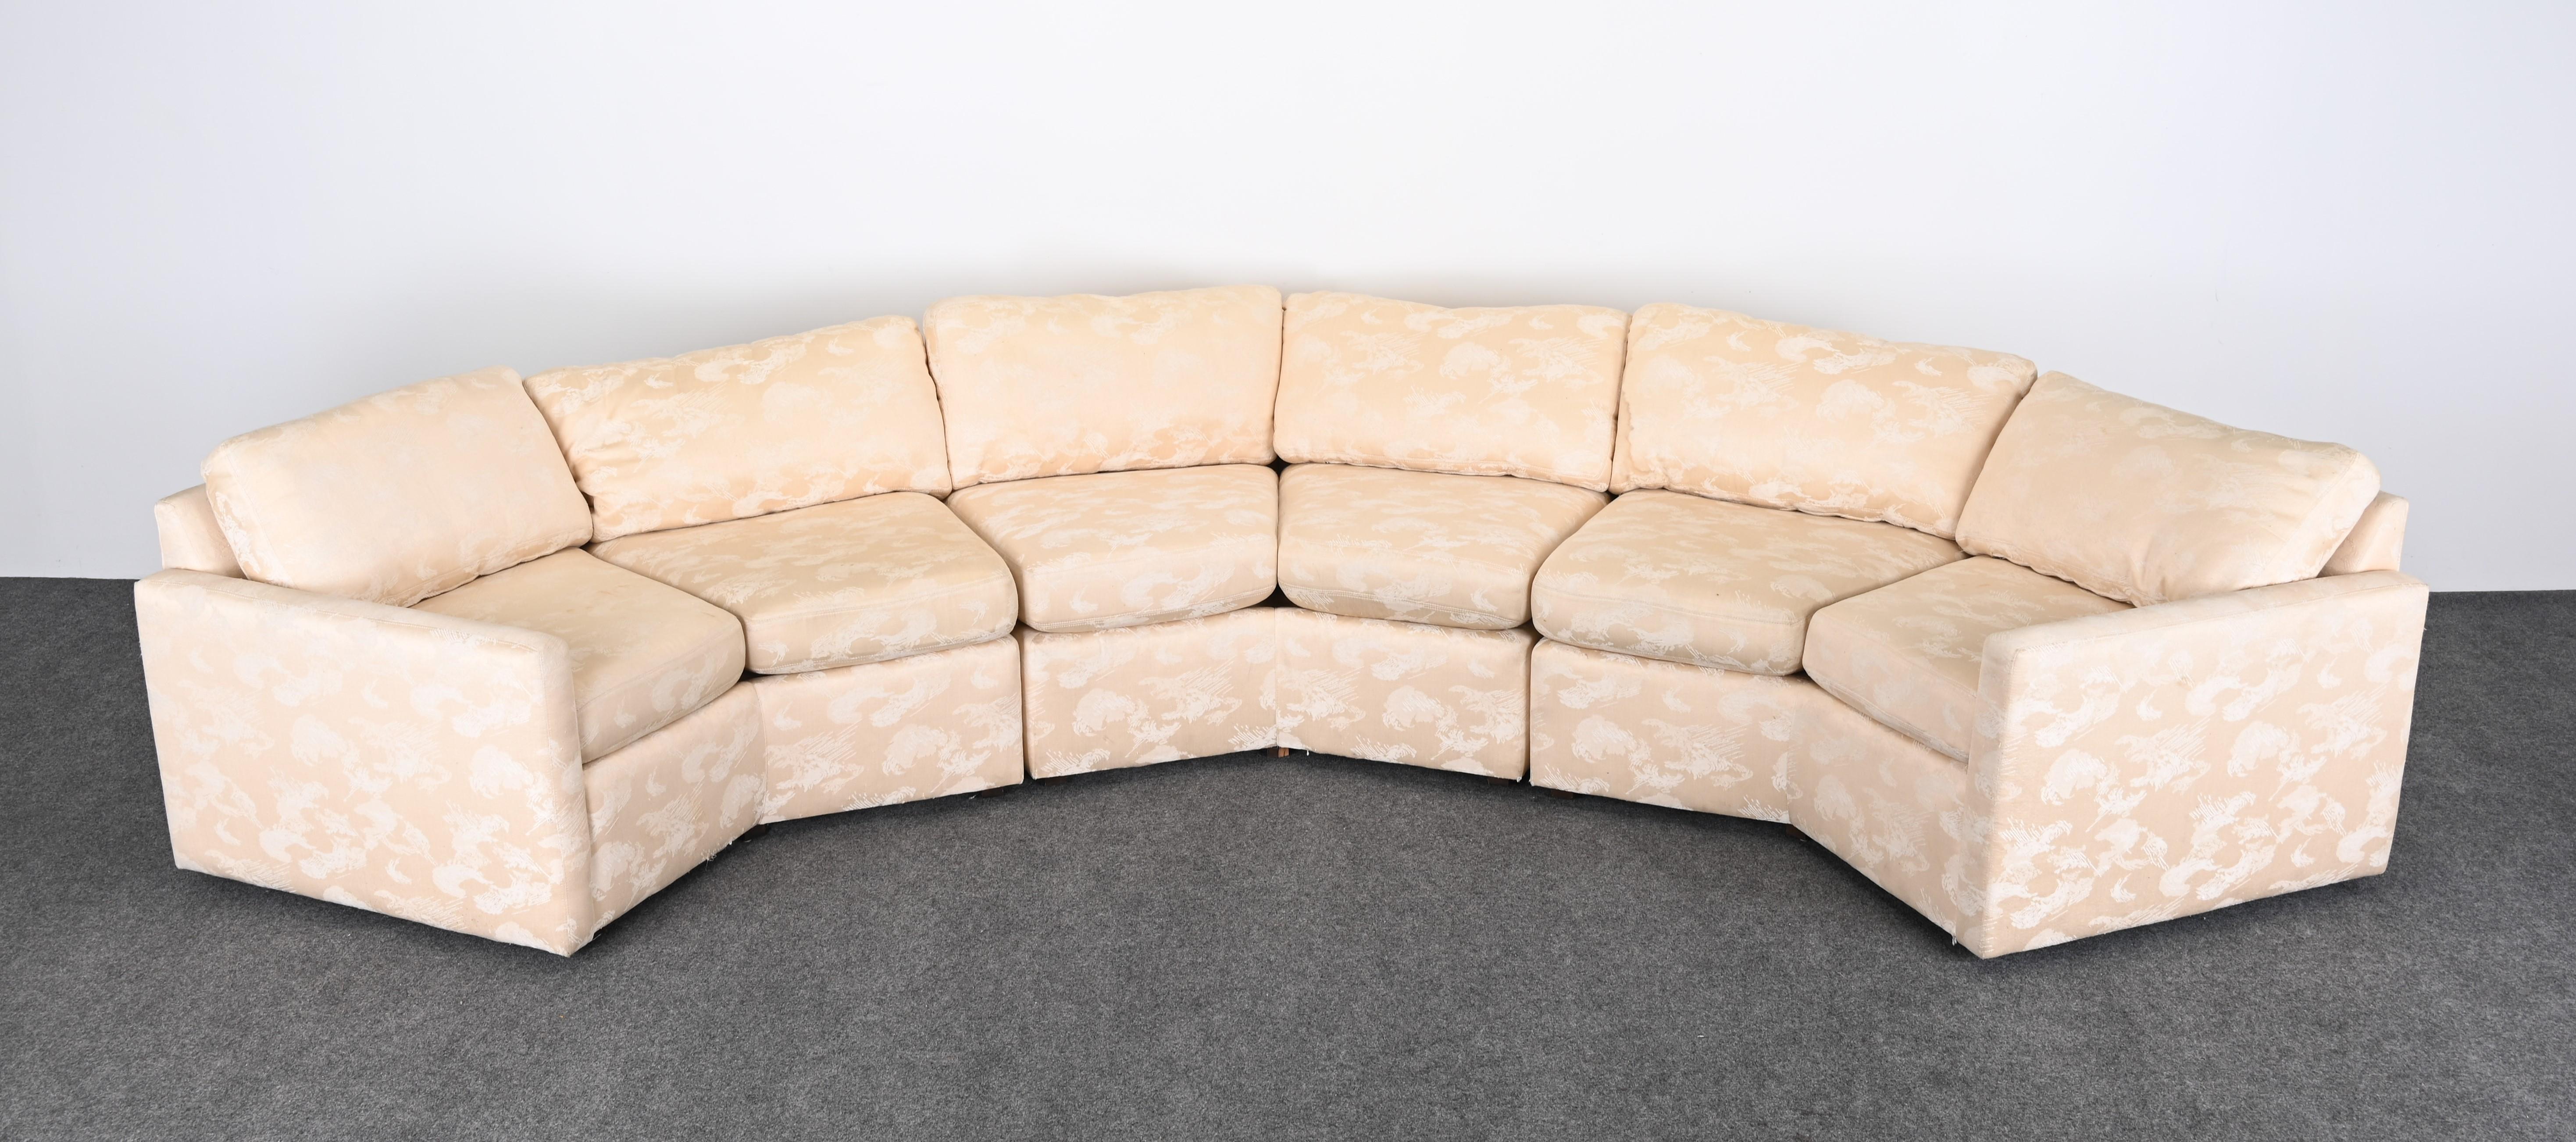 1980's sectional sofa